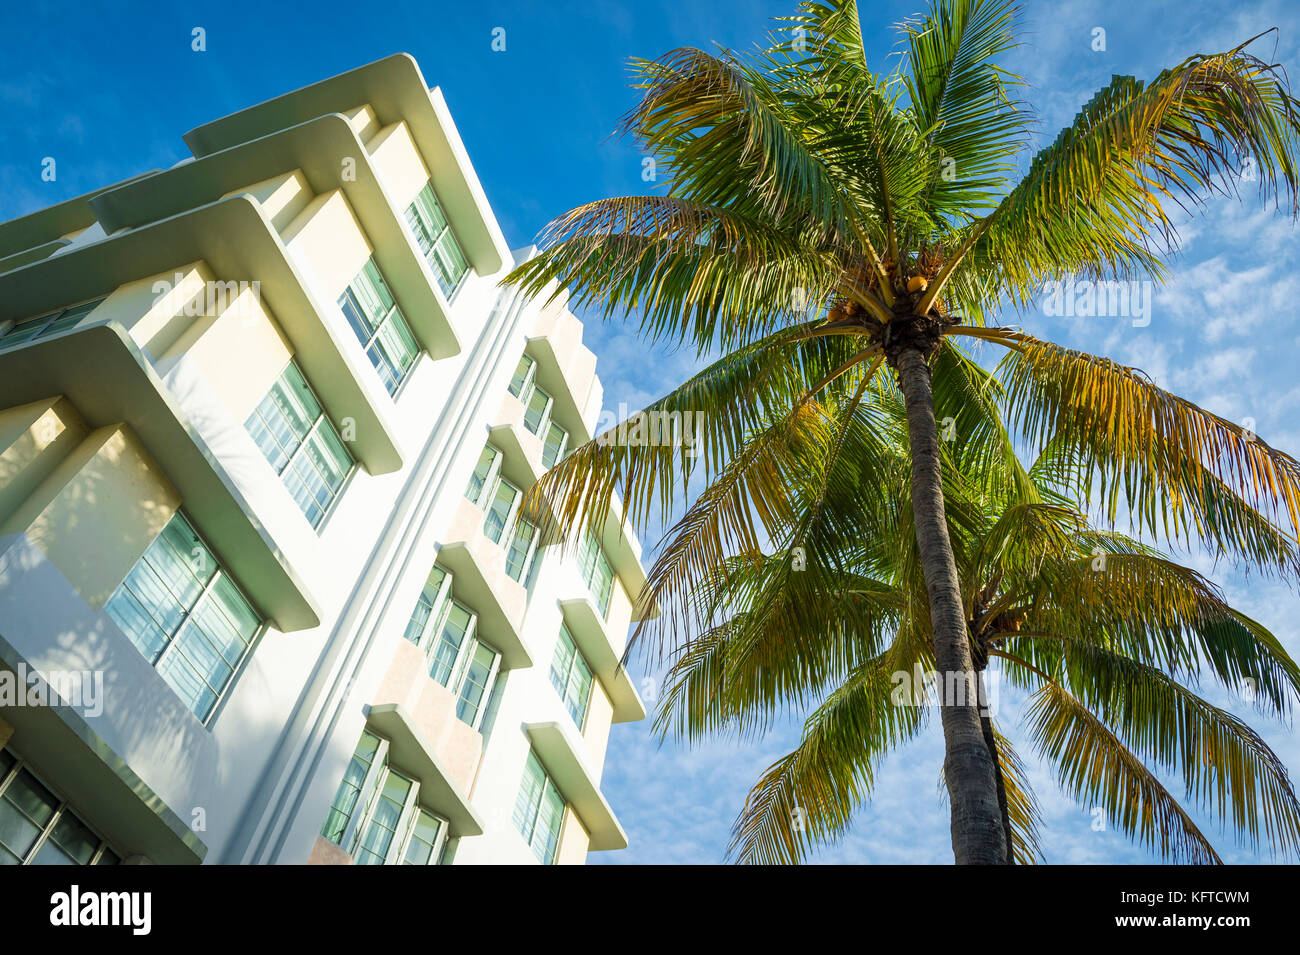 Classic 1930s Art-deco-Architektur und Palmen am Ocean Drive, Miami Beach. Stockfoto